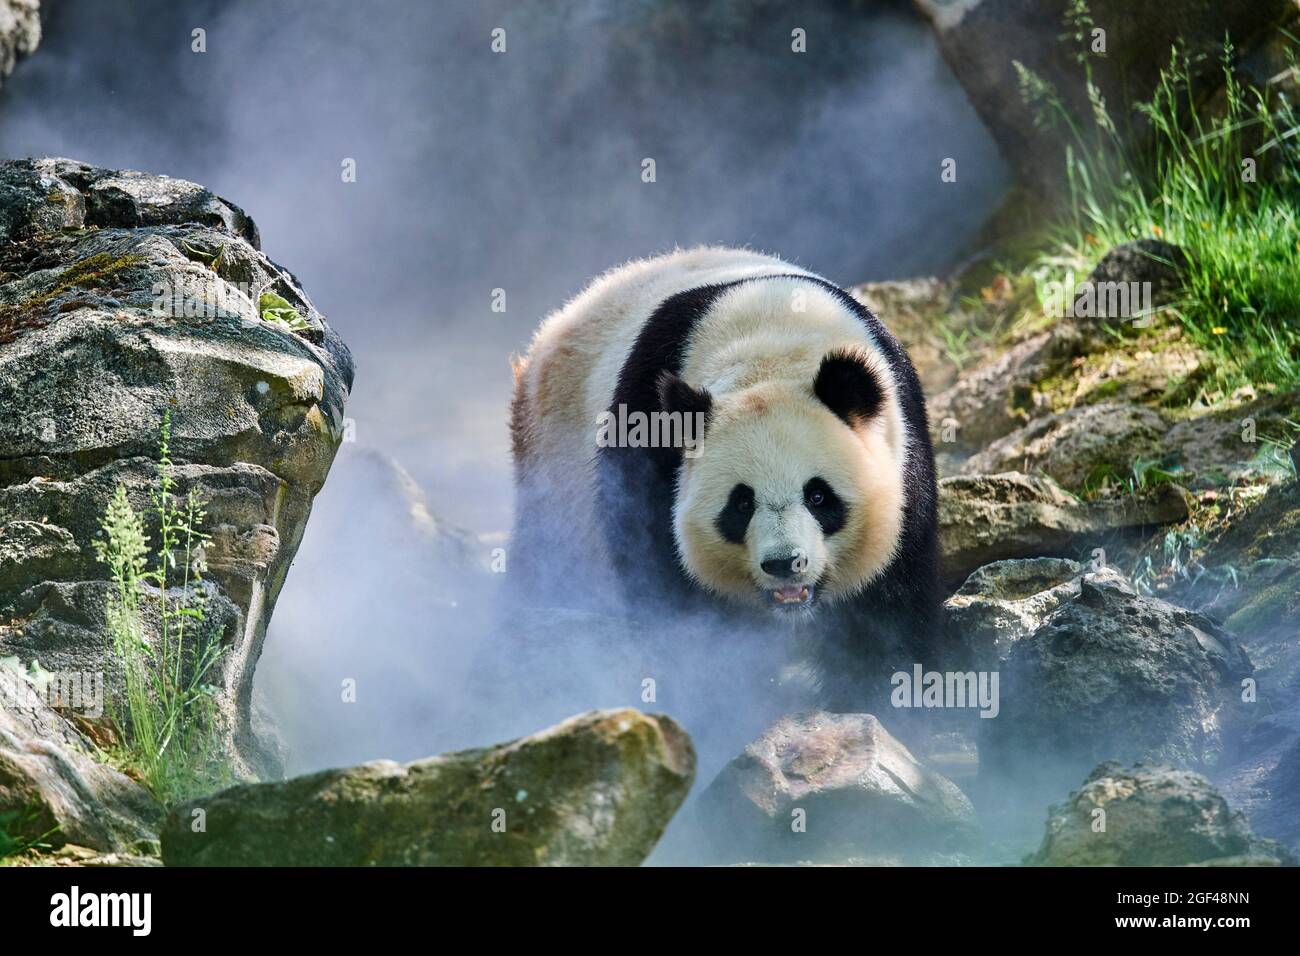 Panda gigante (Ailuropoda melanoleuca) femmina Huan Huan Huan fuori nel suo recinto in nebbia, Captive al Beauval Zoo, Saint Aignan sur Cher, Francia. La nebbia Foto Stock